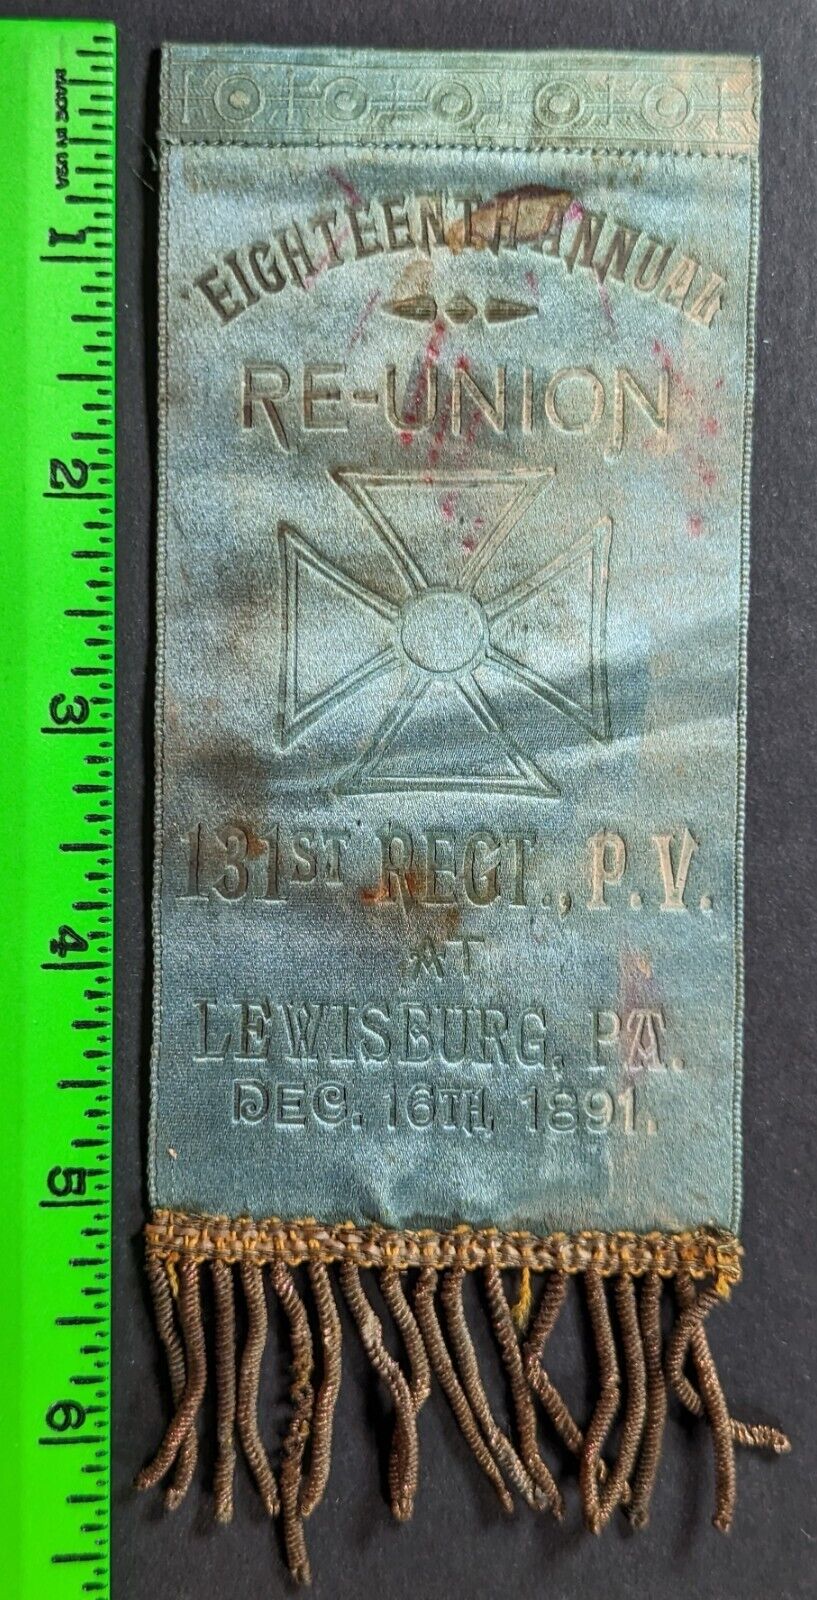 Antique 1891 Civil War 131st Regiment Reunion Lewisburg Pennsylvania Ribbon